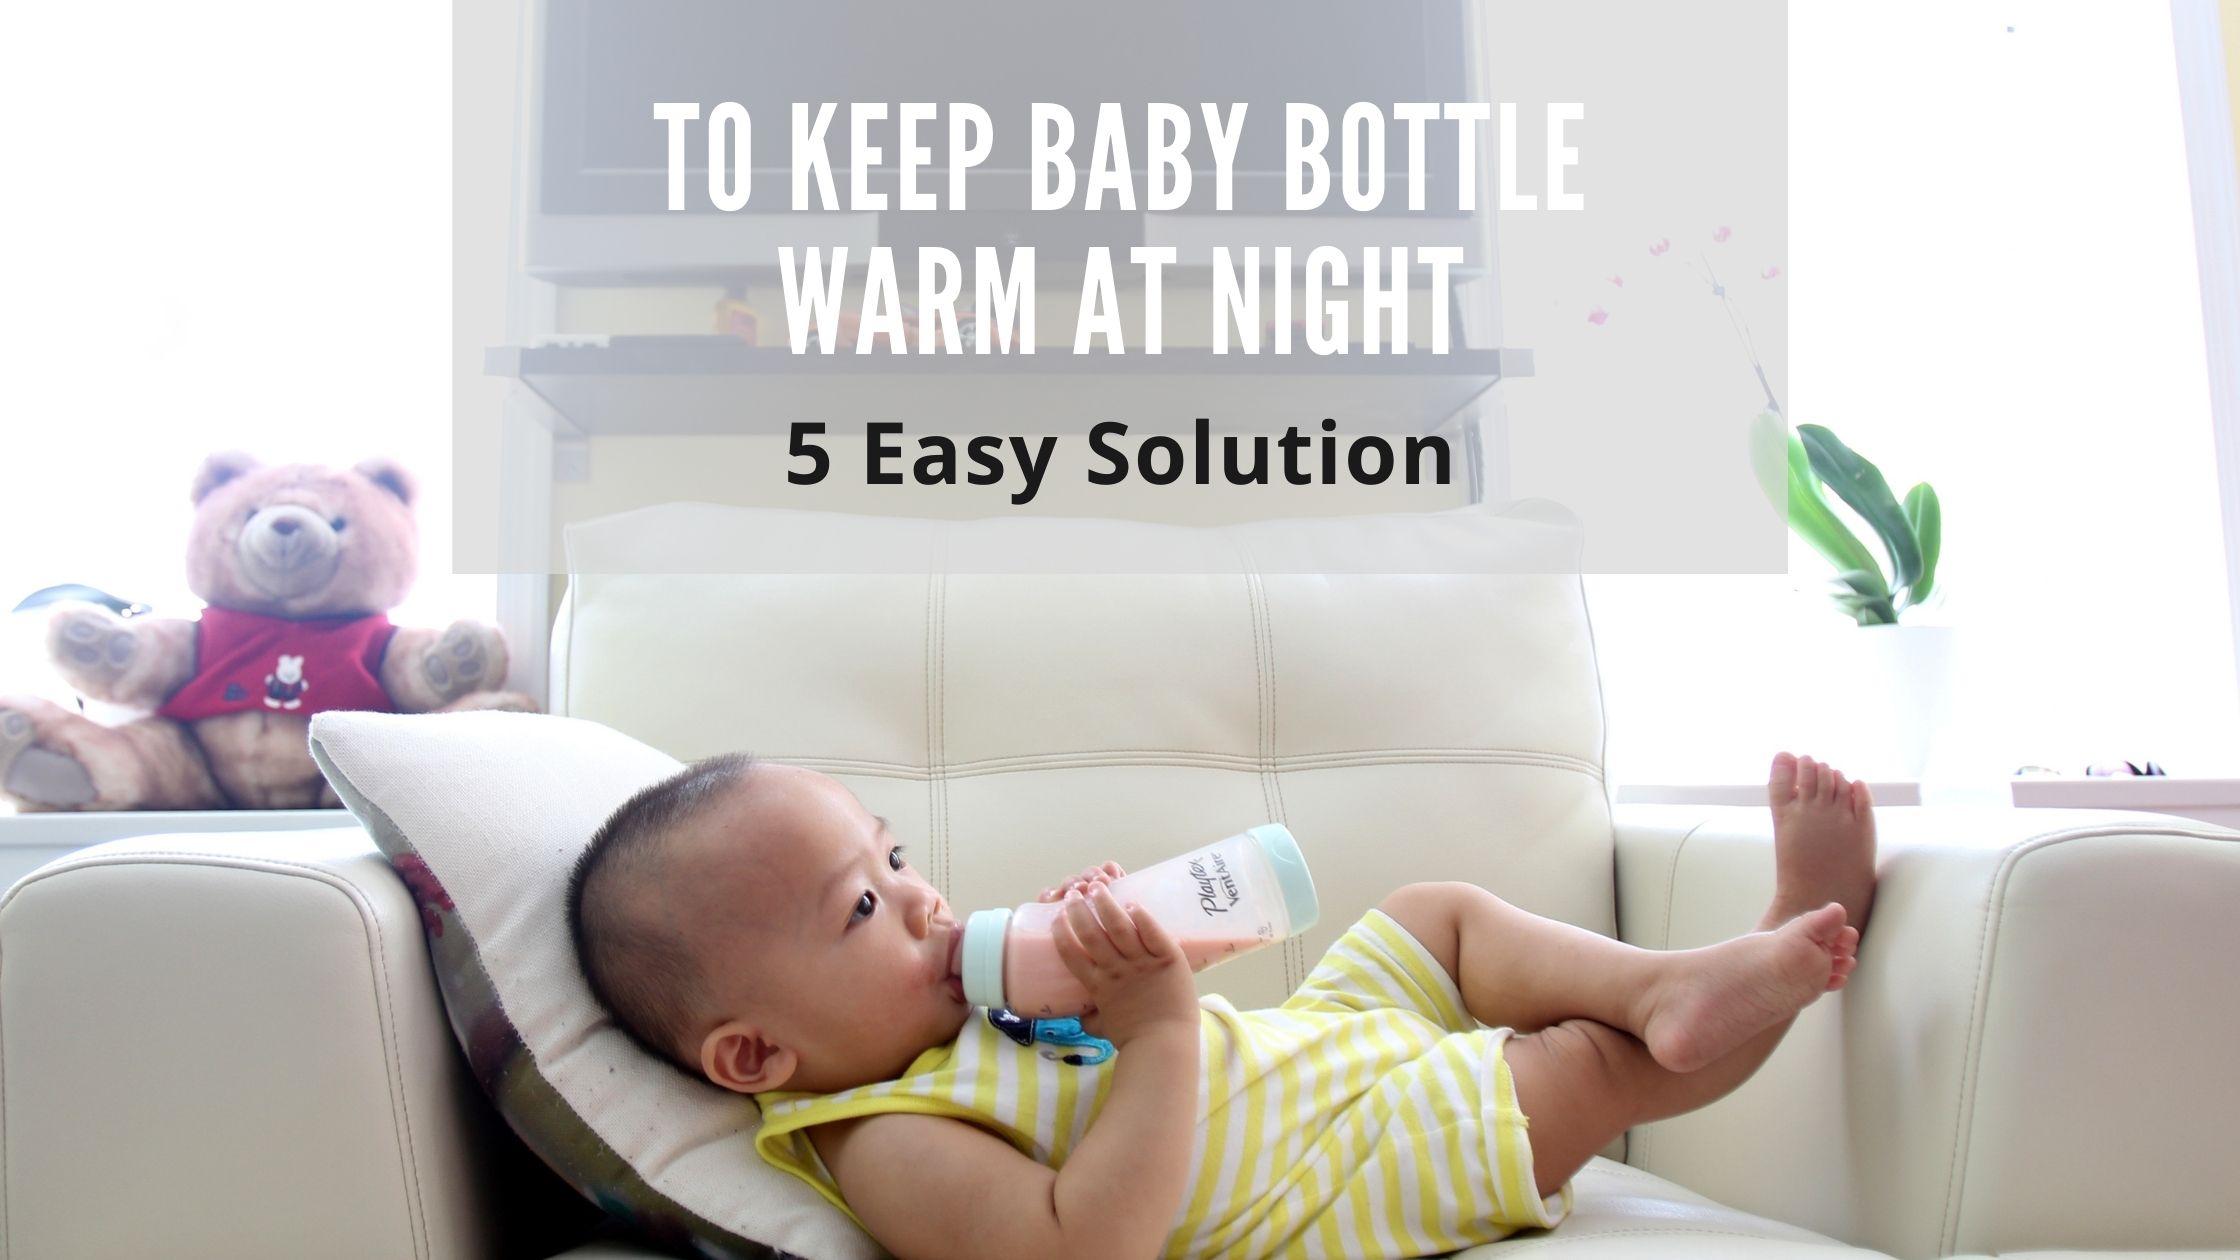 Keep Baby Bottle Warm at Night